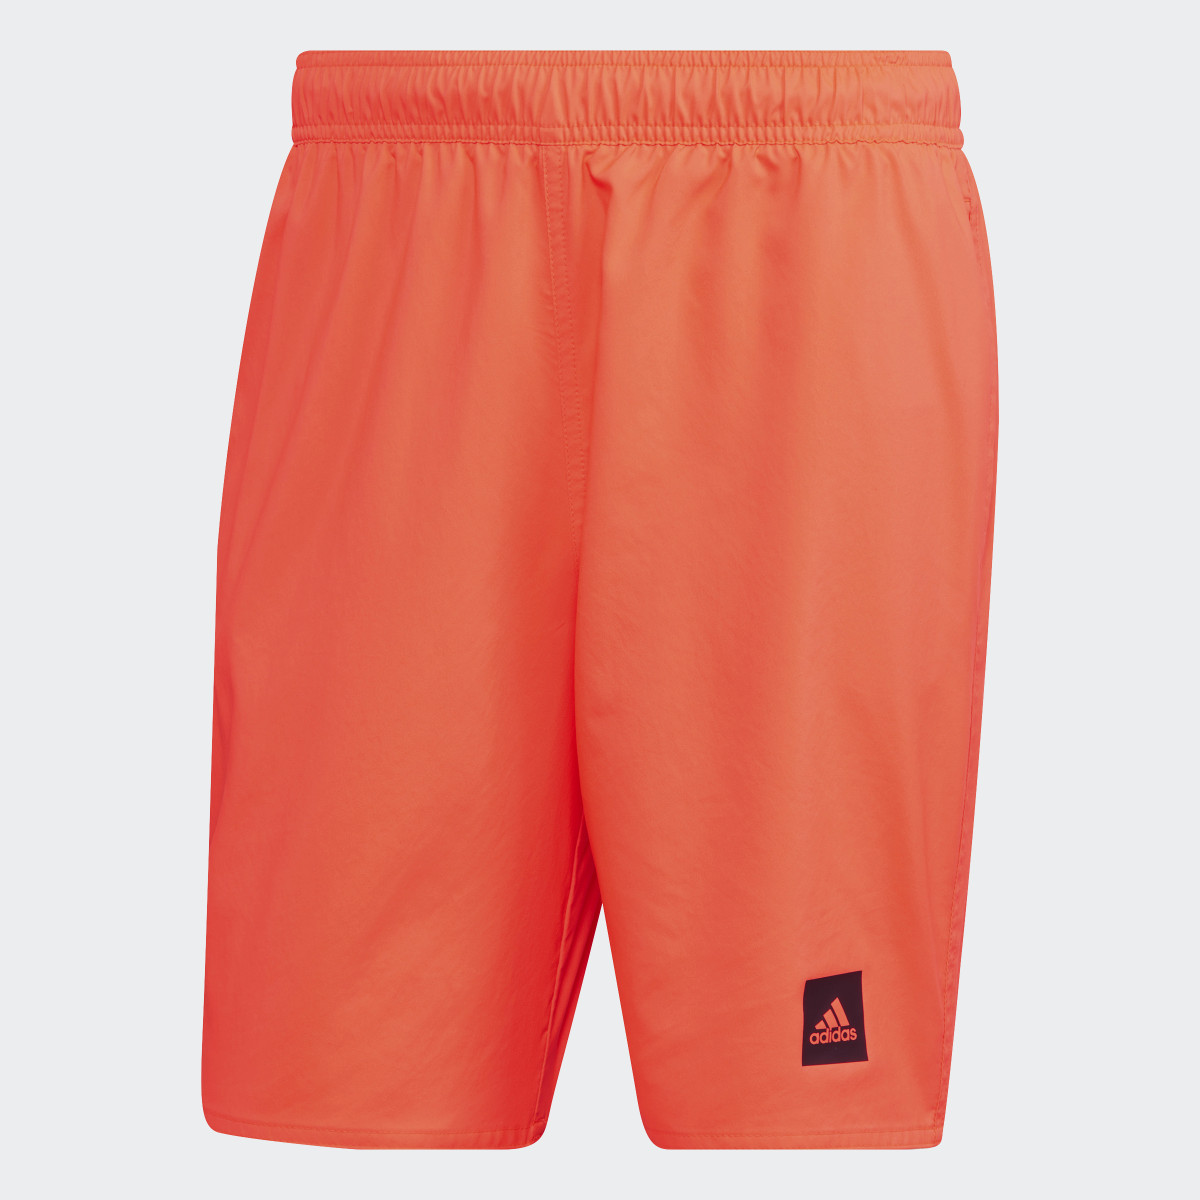 Adidas Classic-Length Solid Swim Shorts. 4